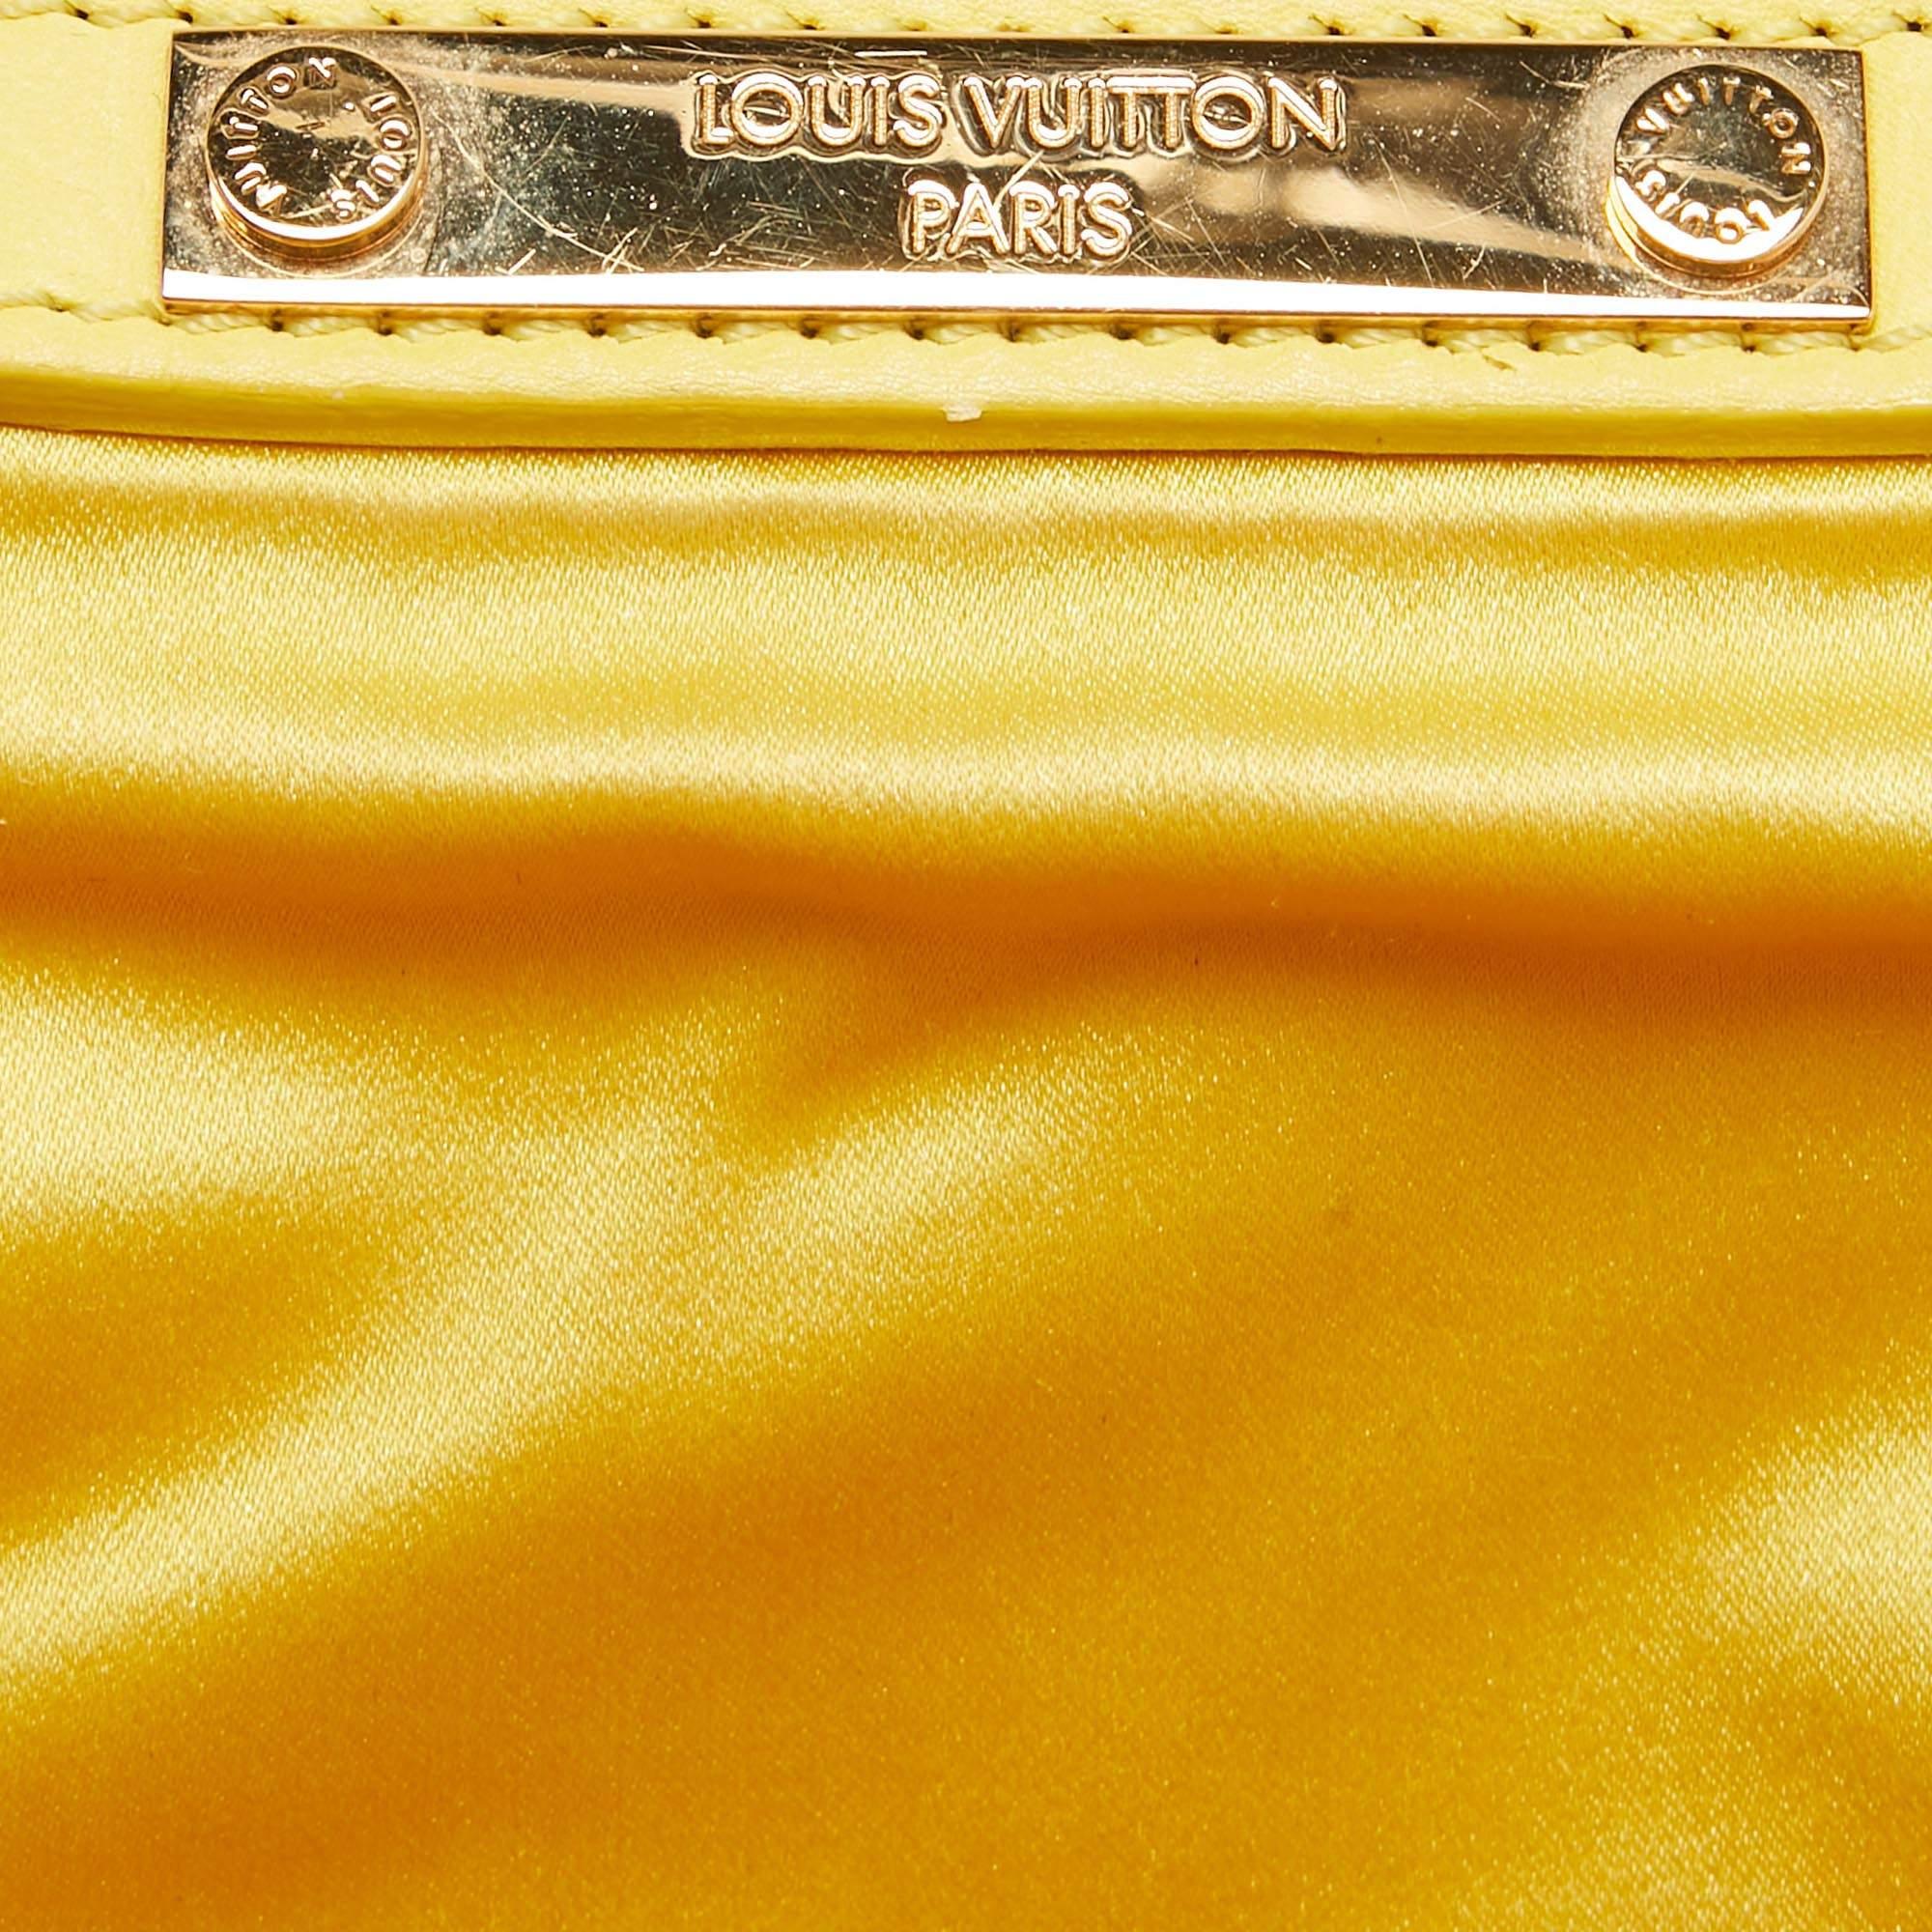 Louis Vuitton - Sac Motard Firebird multicolore, édition limitée 10